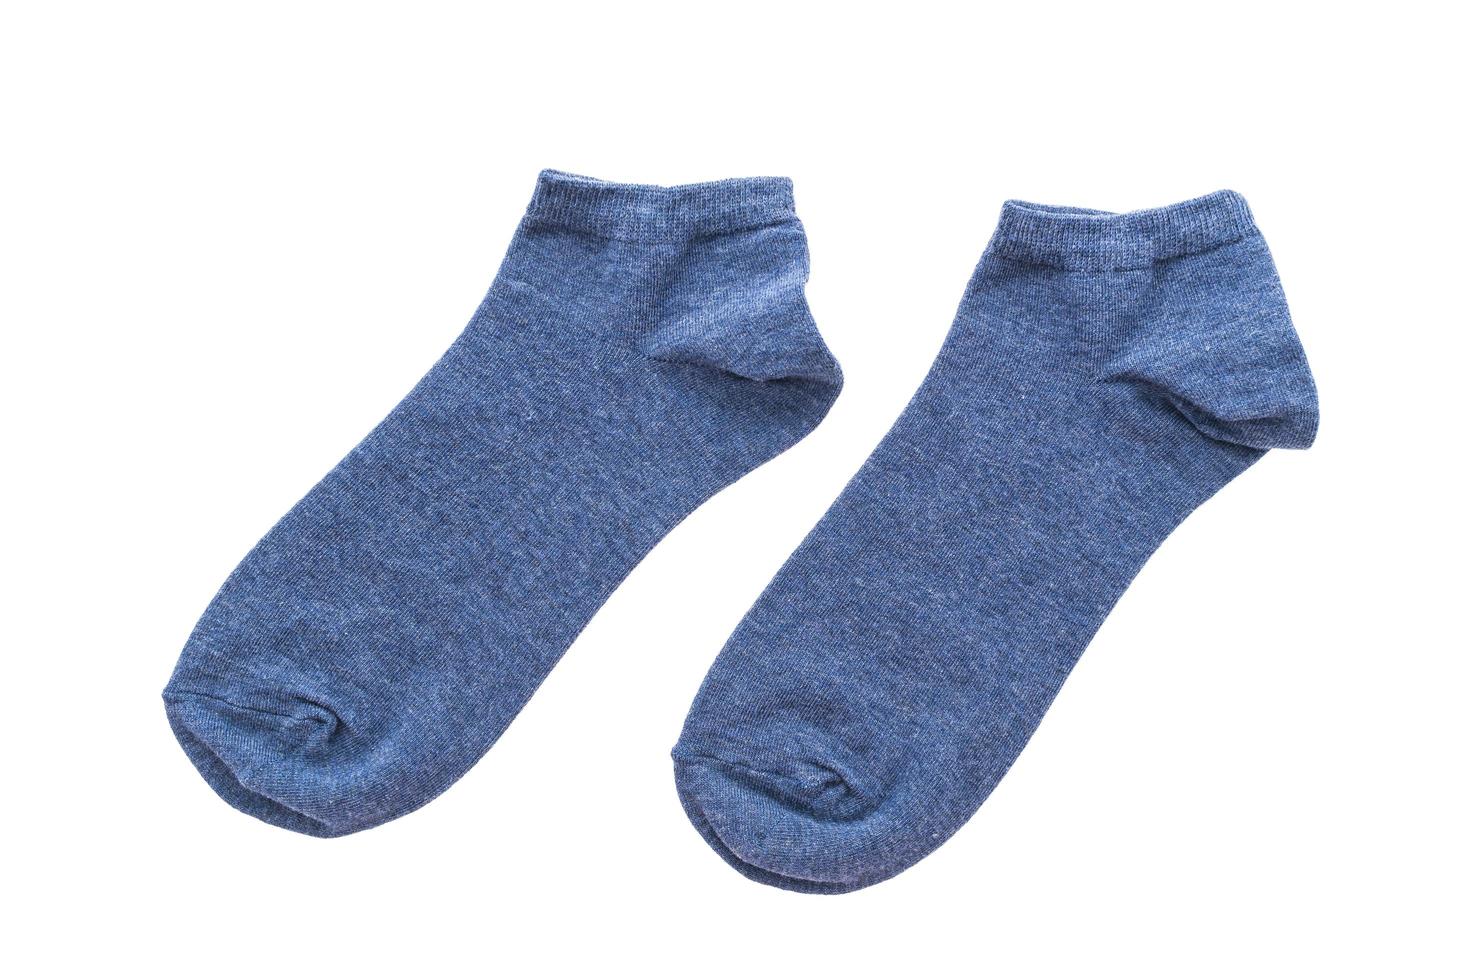 Pair of socks photo